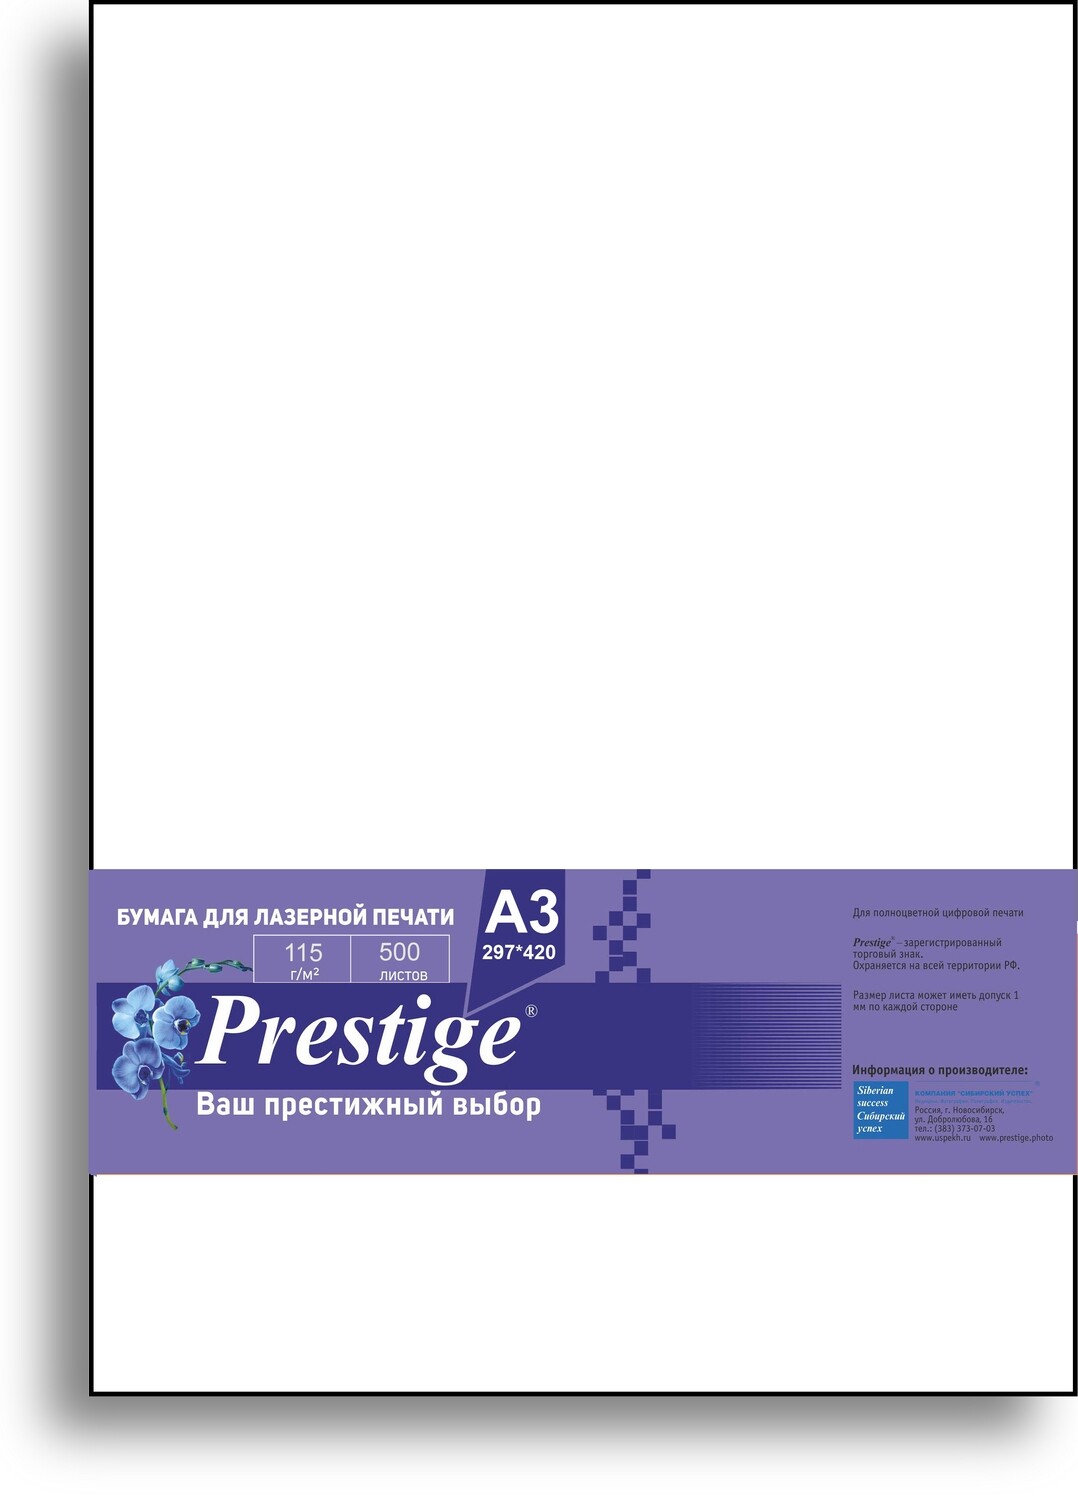 Бумага Prestige для лазерной печати 115г/А3/Матов.Двуст/500л